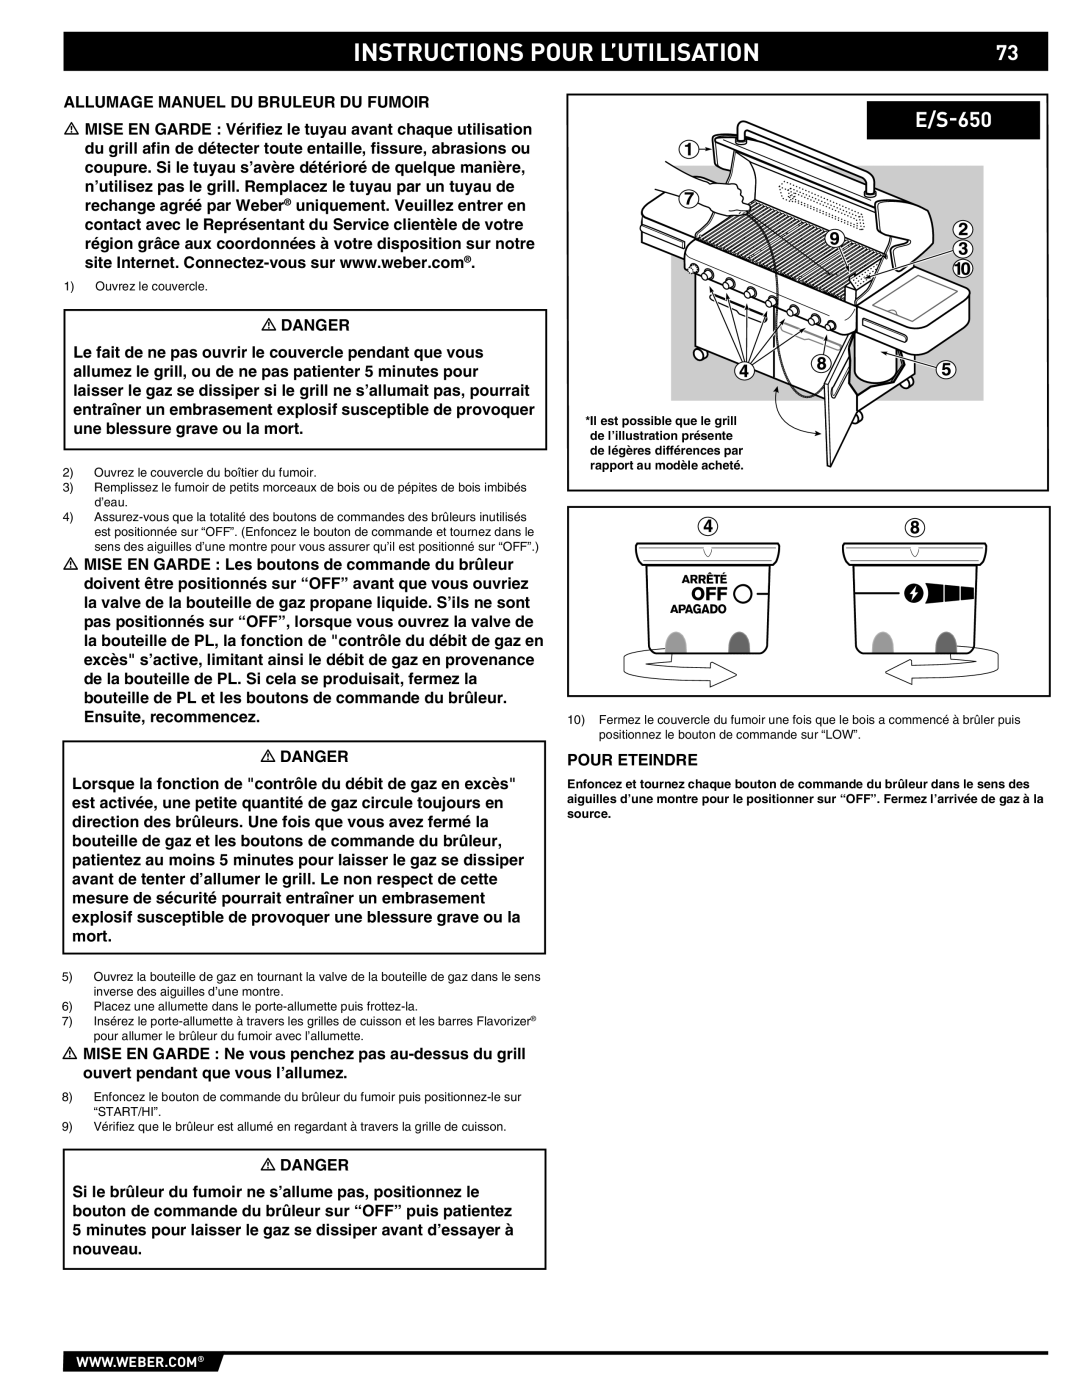 Summit E/S-620/650 manual Allumage Manuel DU Bruleur DU Fumoir 